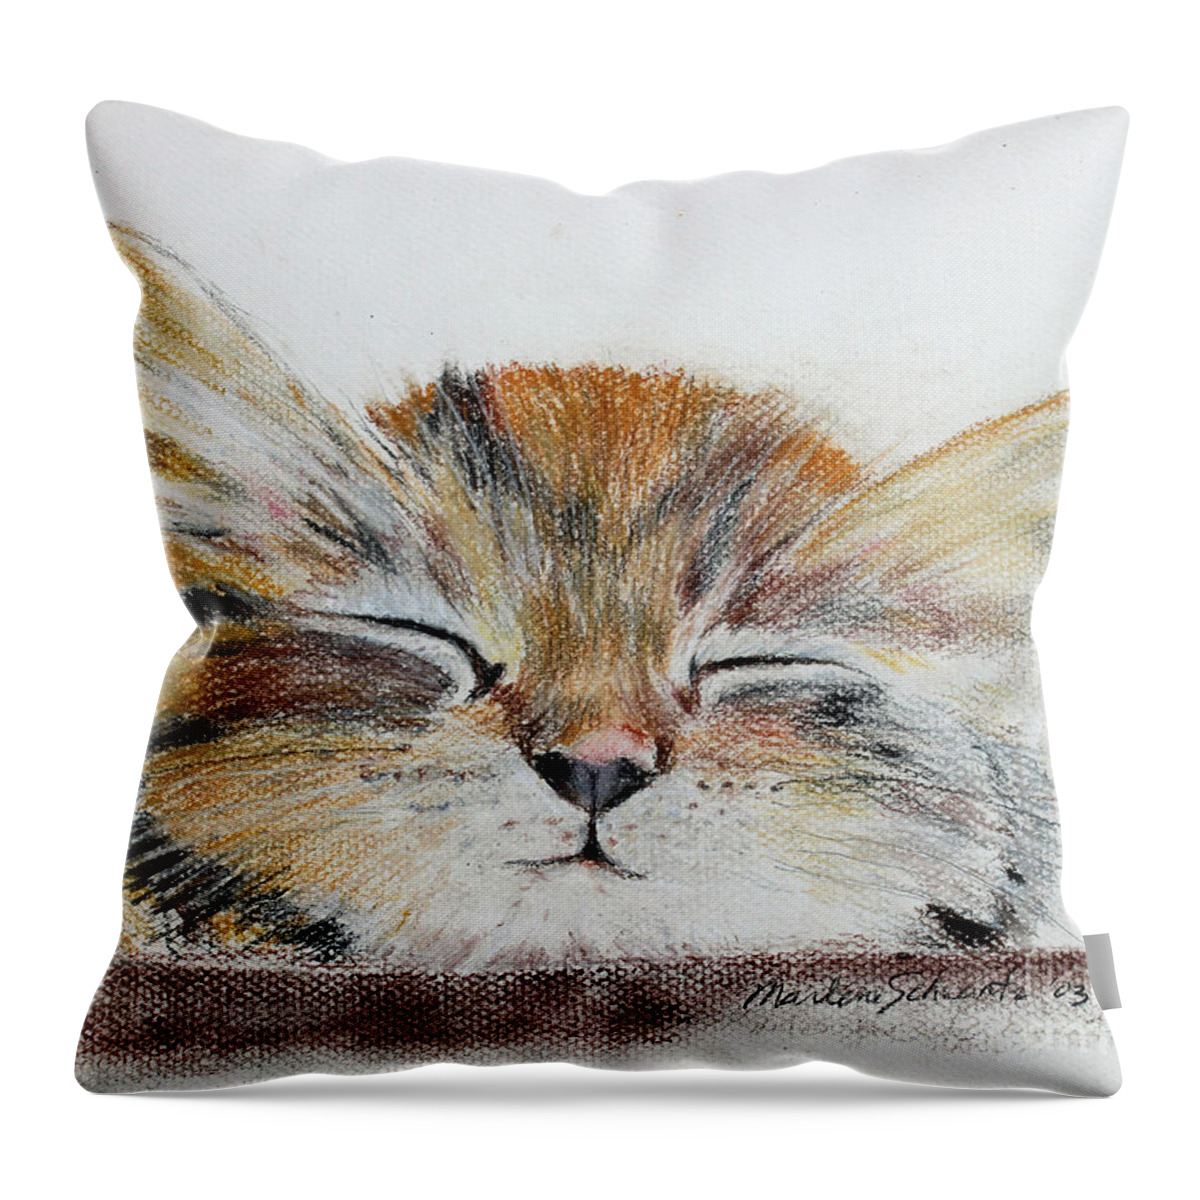 Kitten Throw Pillow featuring the painting Sleepyhead by Marlene Schwartz Massey